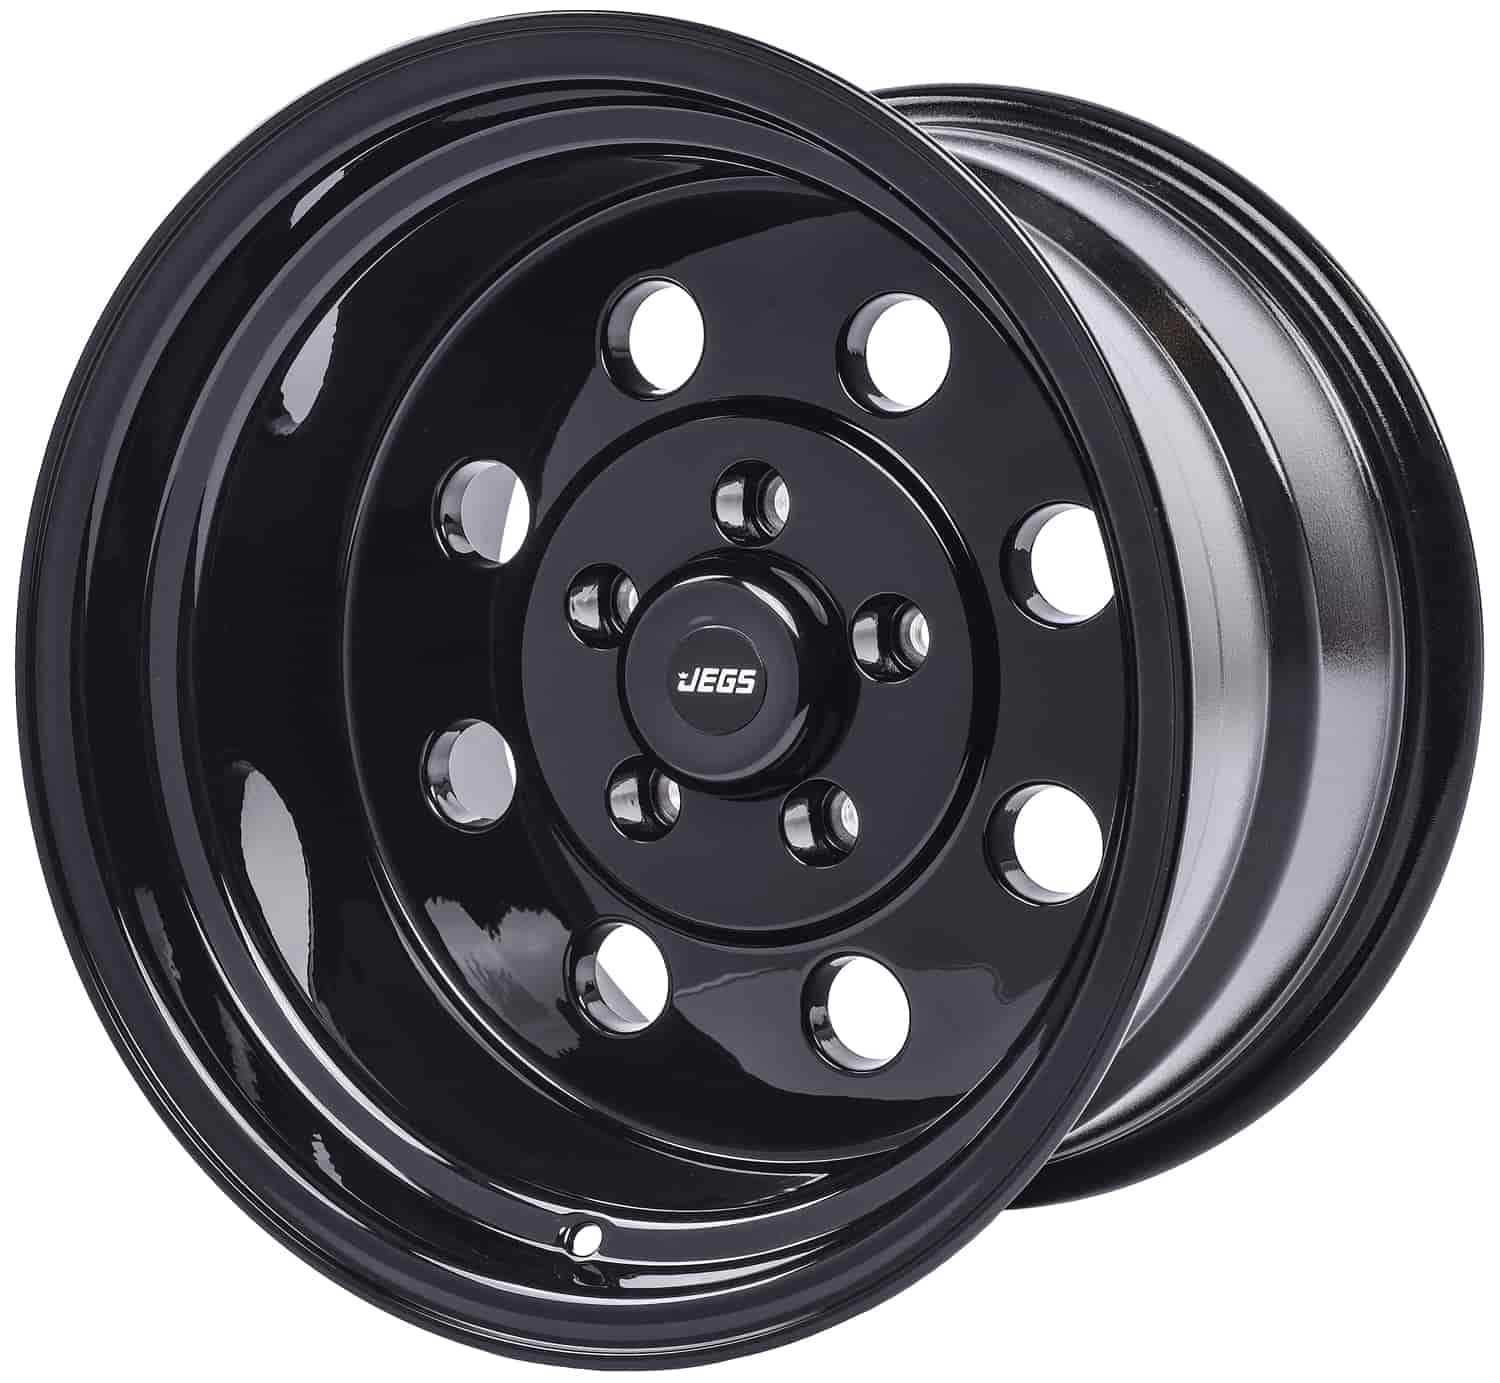 Sport Lite 8-Hole Wheel [Size: 15" x 10"] Black